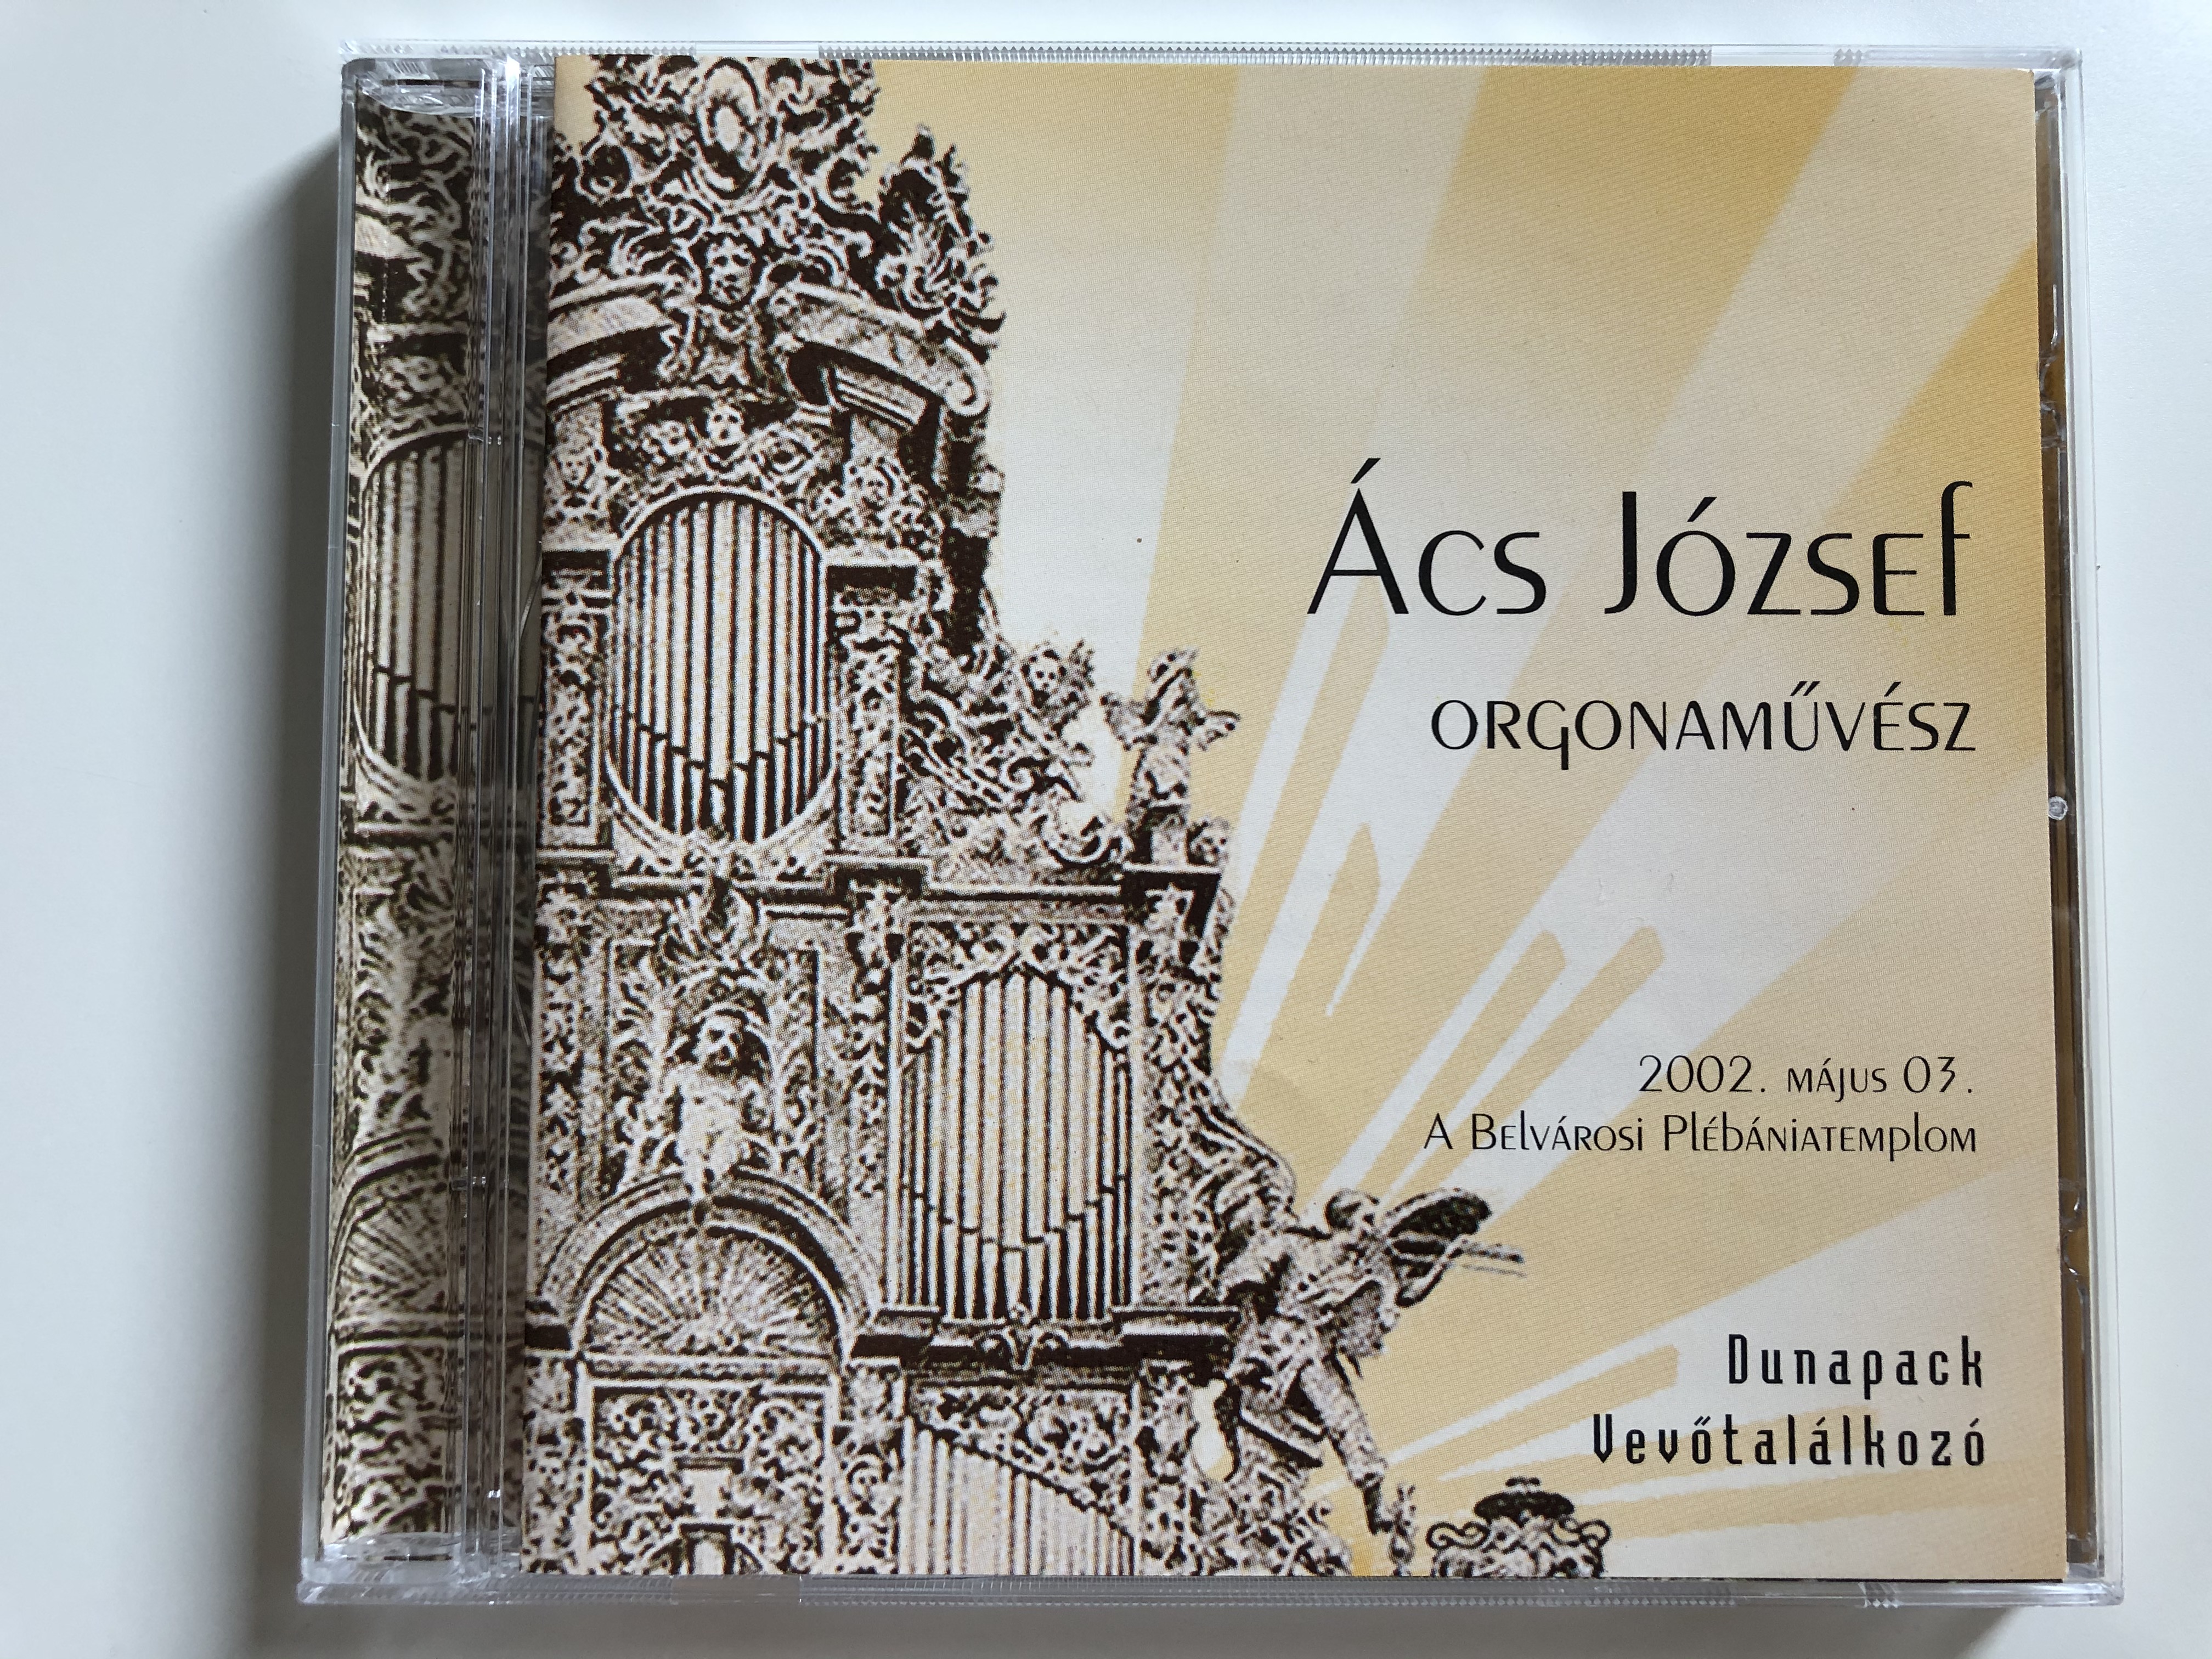 acs-jozsef-orgonamuvesz-2002.-majus-03.-a-belvarosi-plebaniatemplom-dunapack-audio-cd-2001-1-.jpg